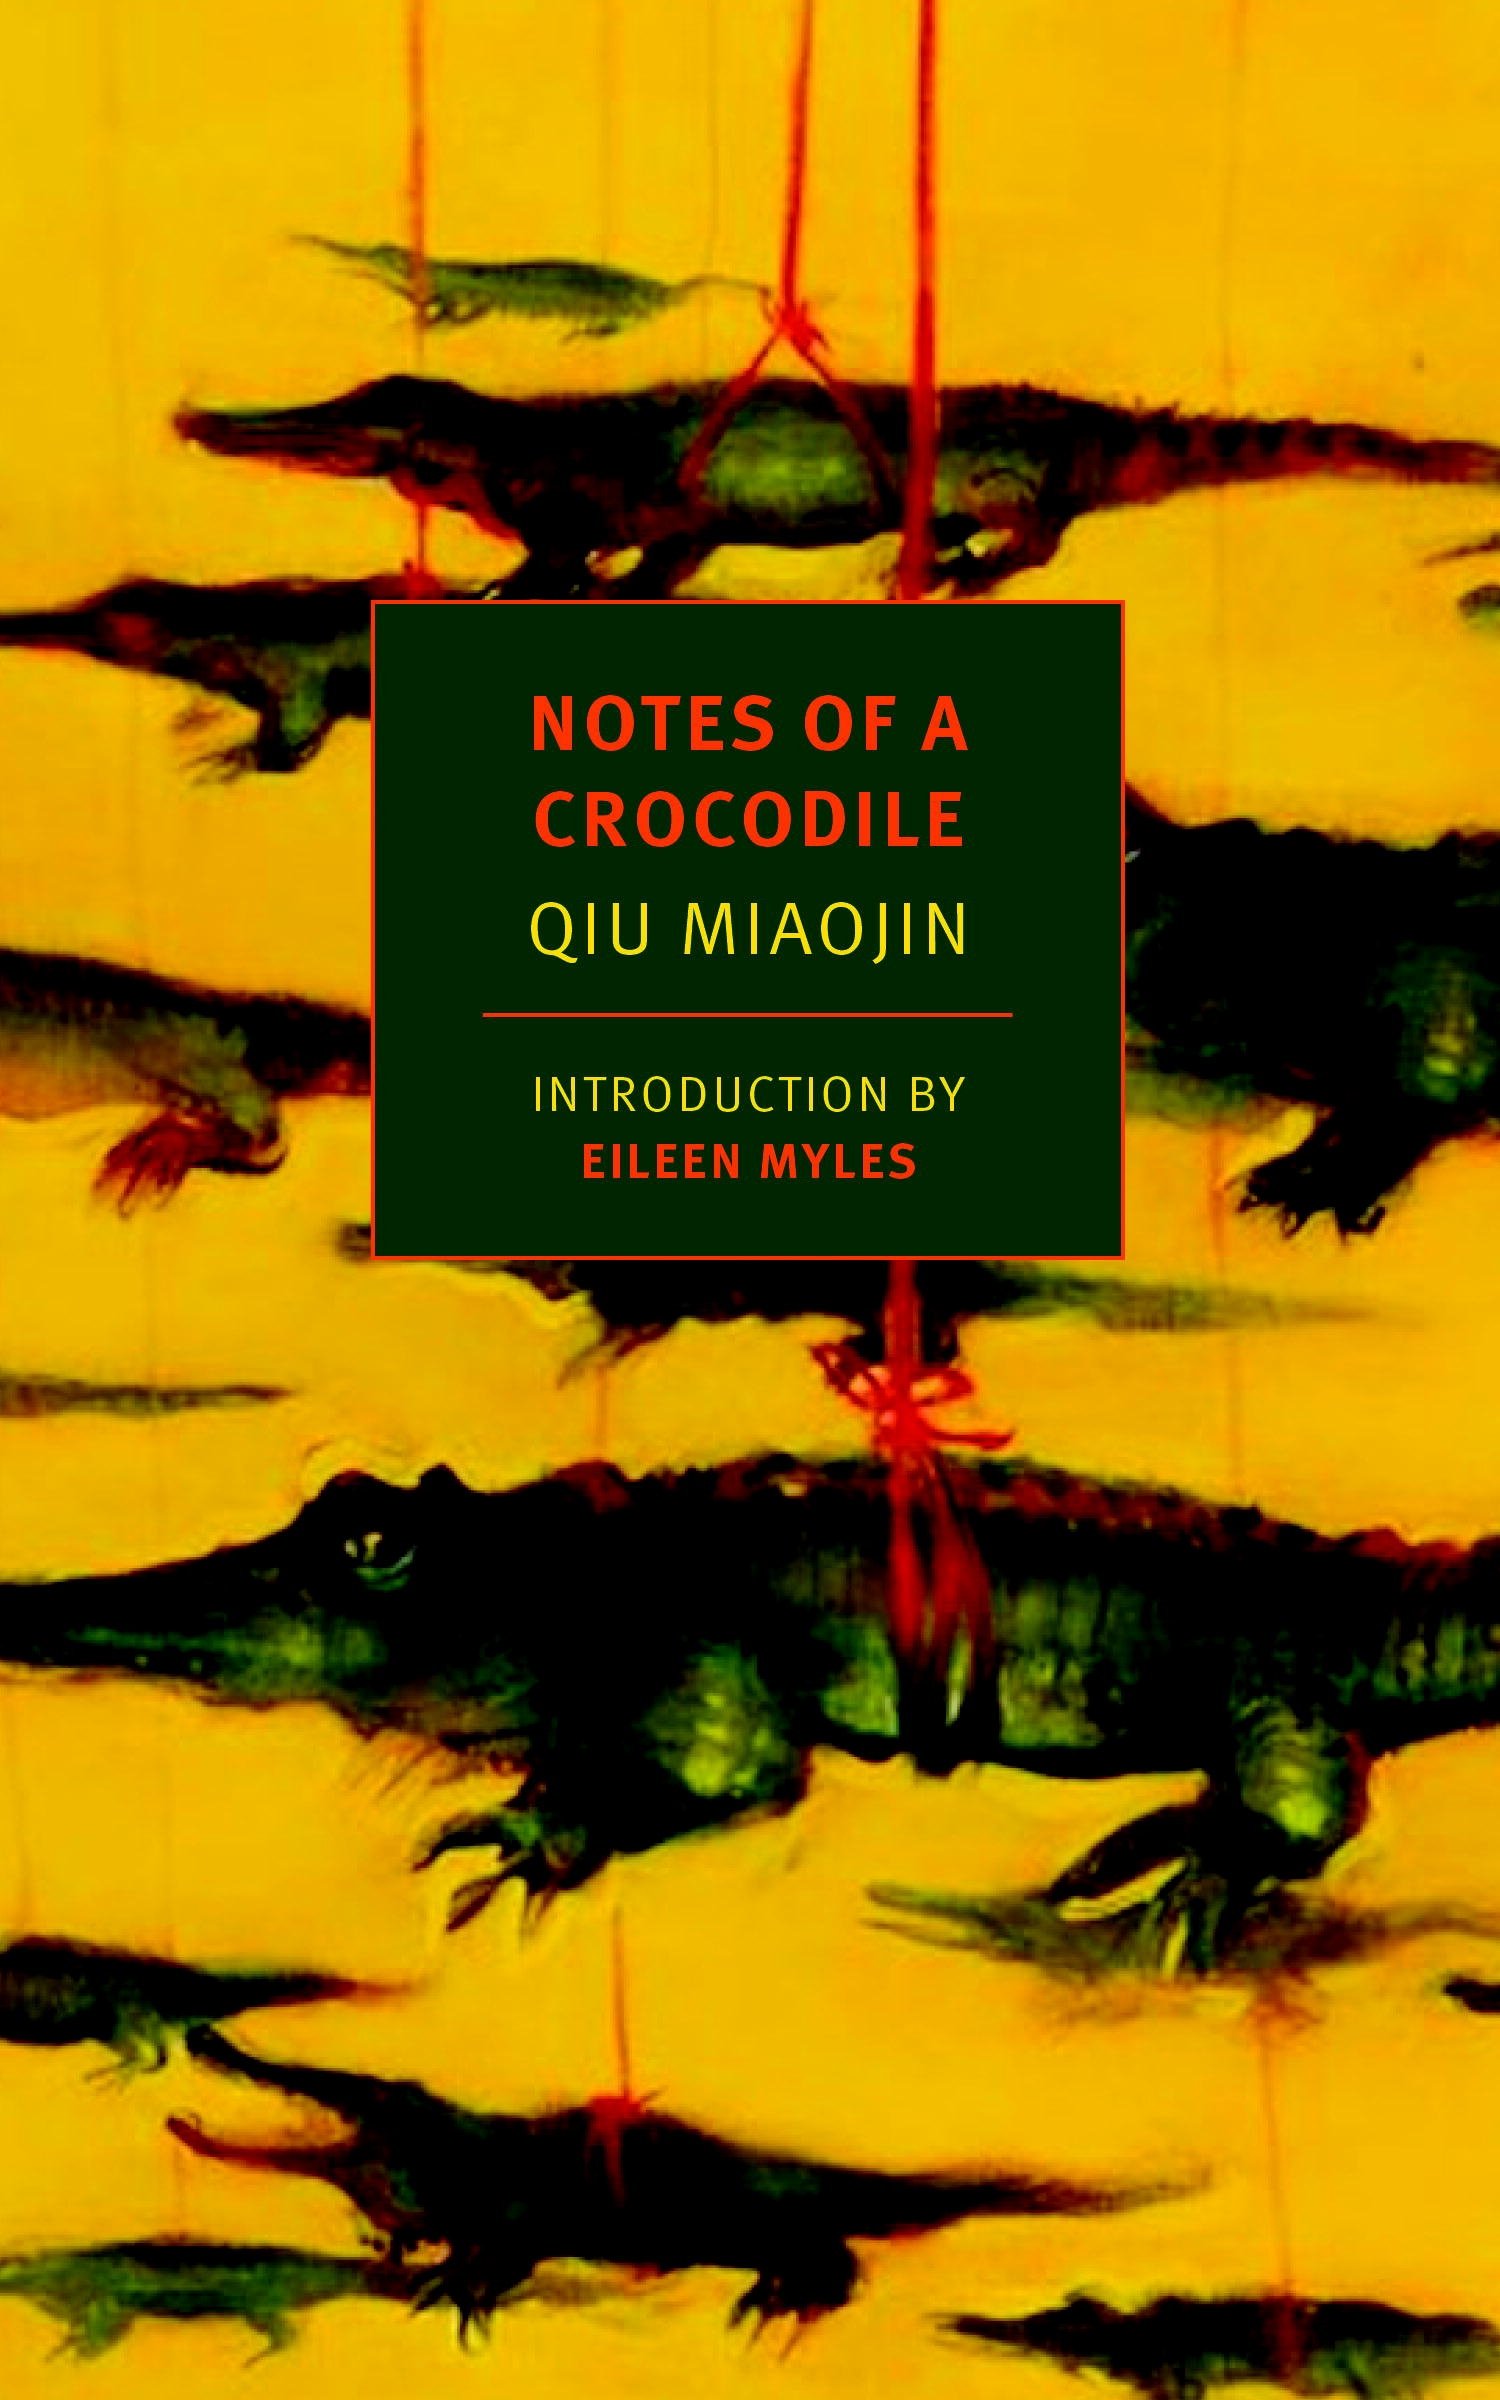 Qiu Miaojin, tr. Bonnie Huie, Notes of a Crocodile